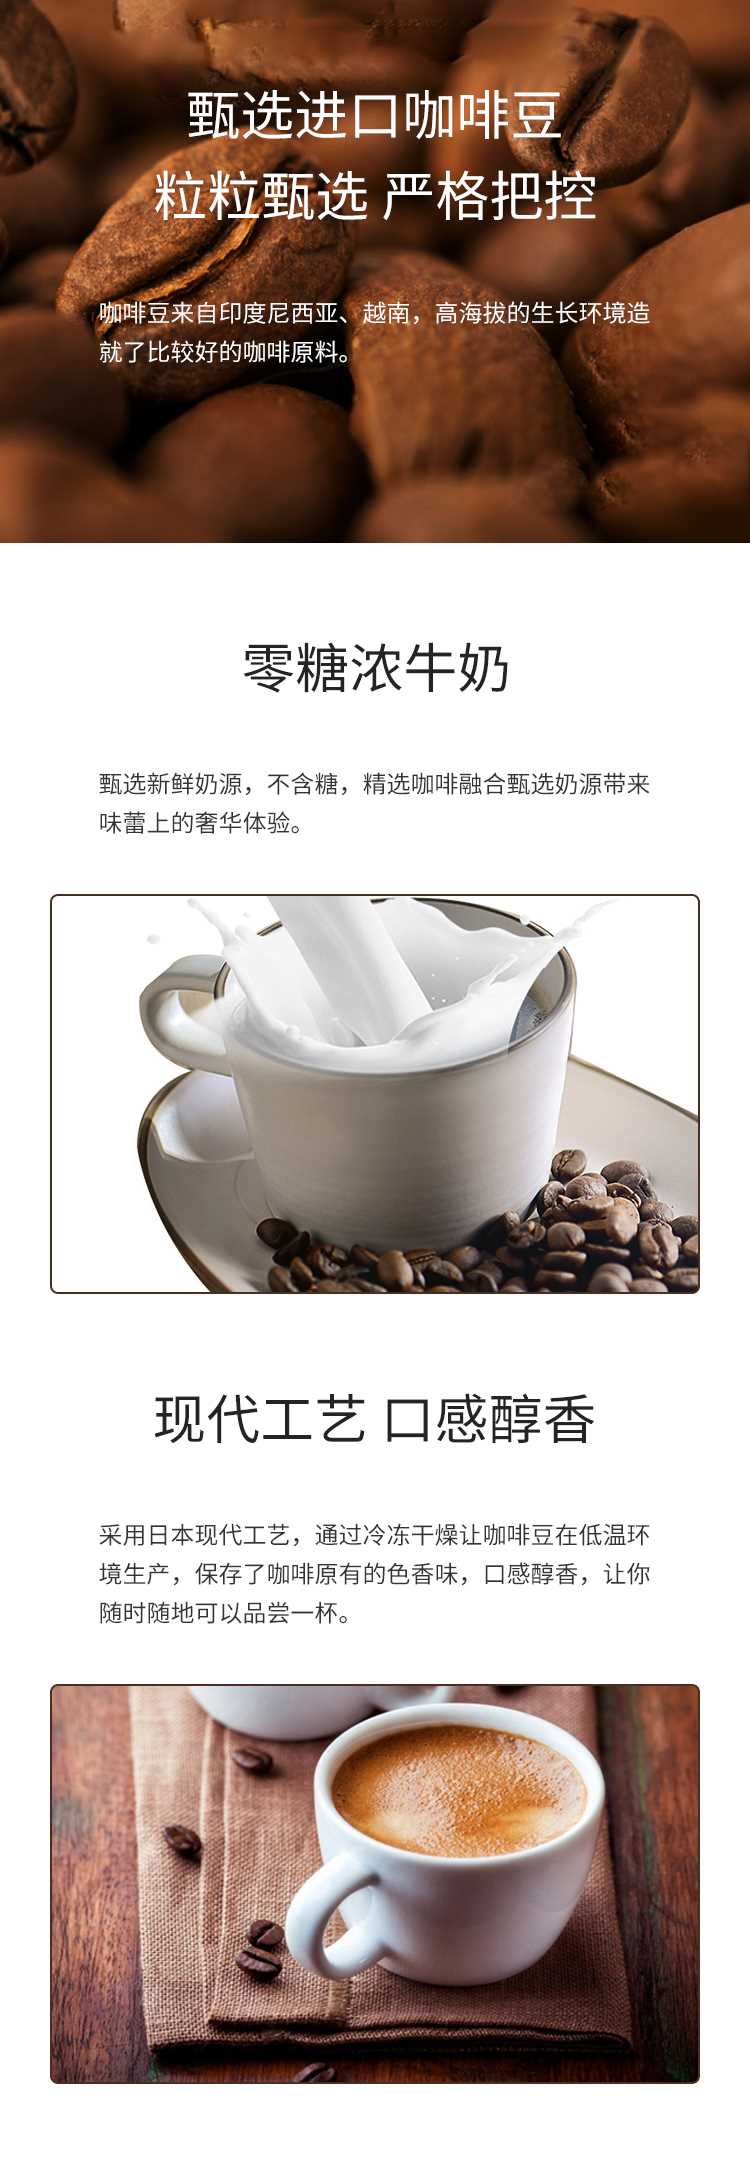 AGF-CAFE-LATORY棒状零糖浓牛奶咖啡拿铁8包入_02.jpg